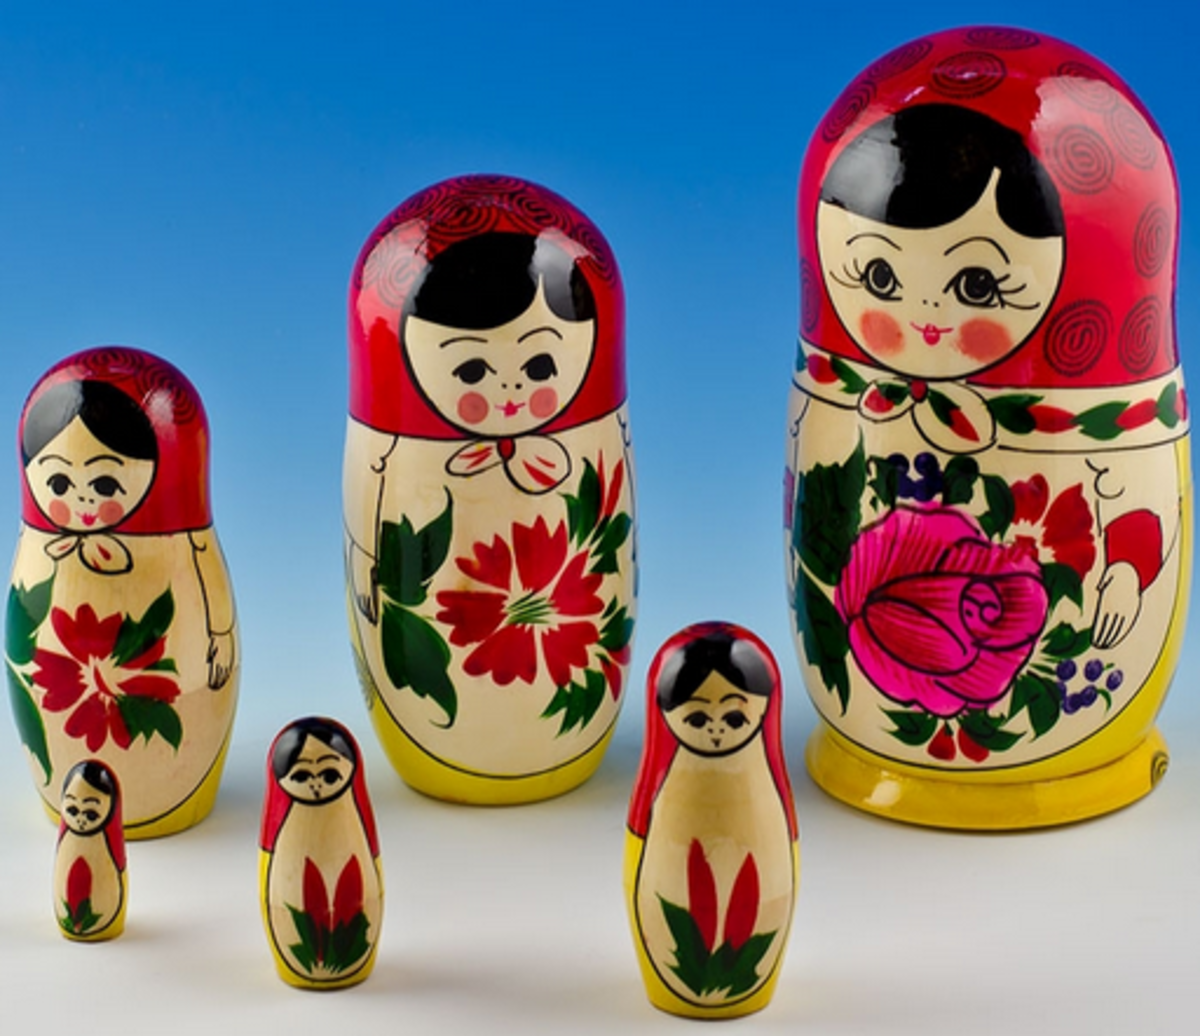 For the Love of Russian Matryoshka Nesting Dolls